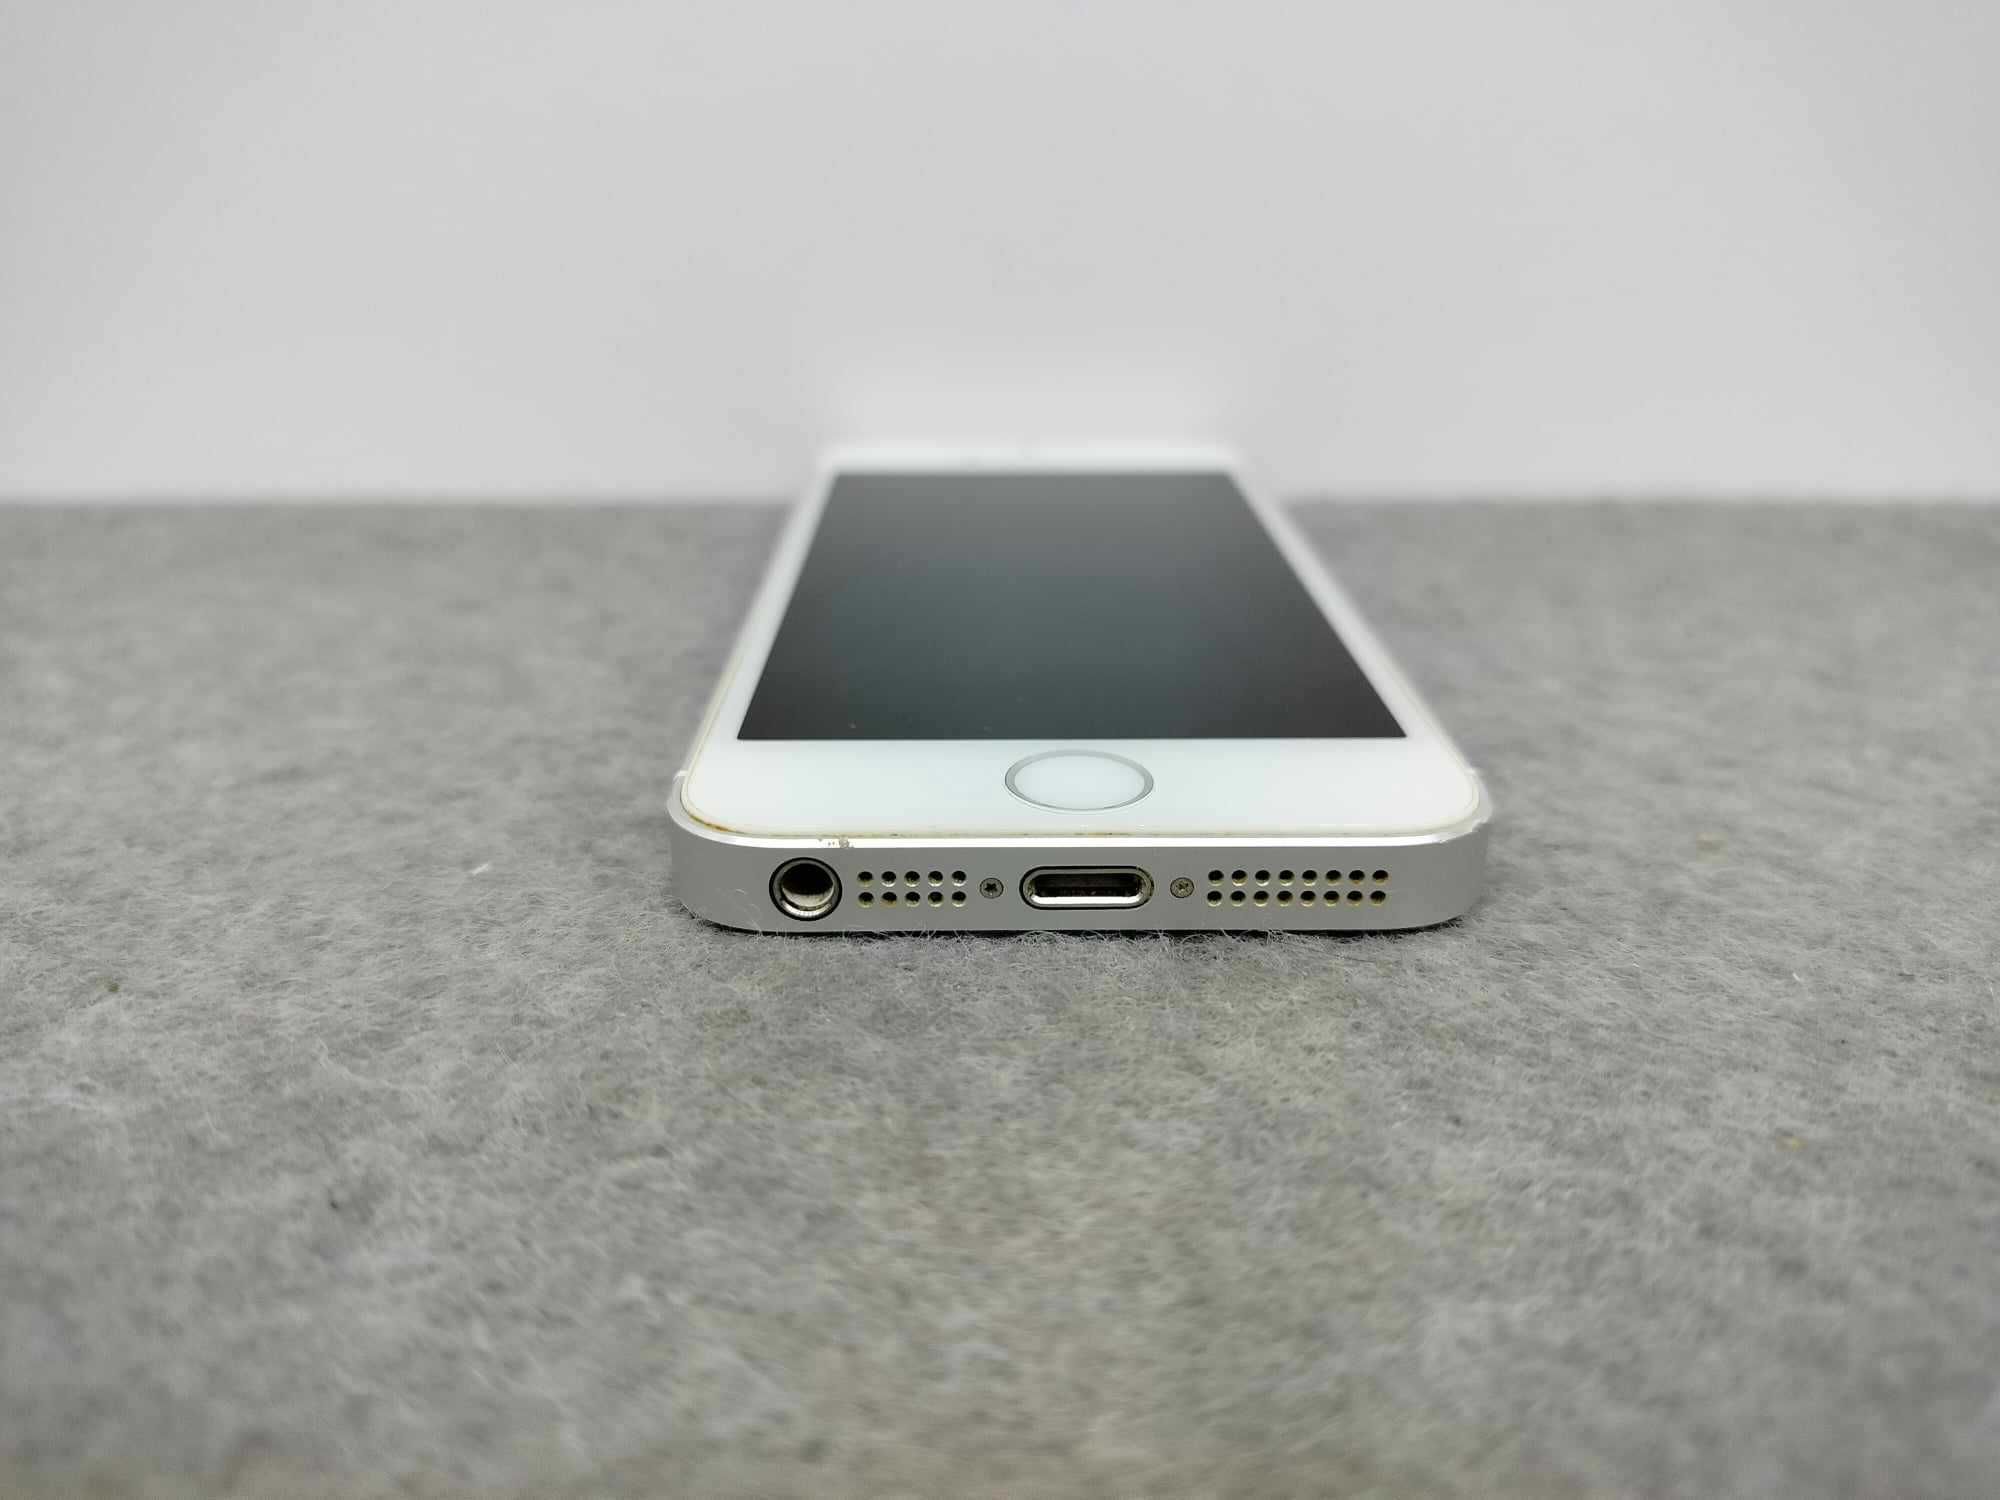 Smartfon iPhone 5S 16GB 1GB RAM Apple A7 Biały BDB Duży wybór!